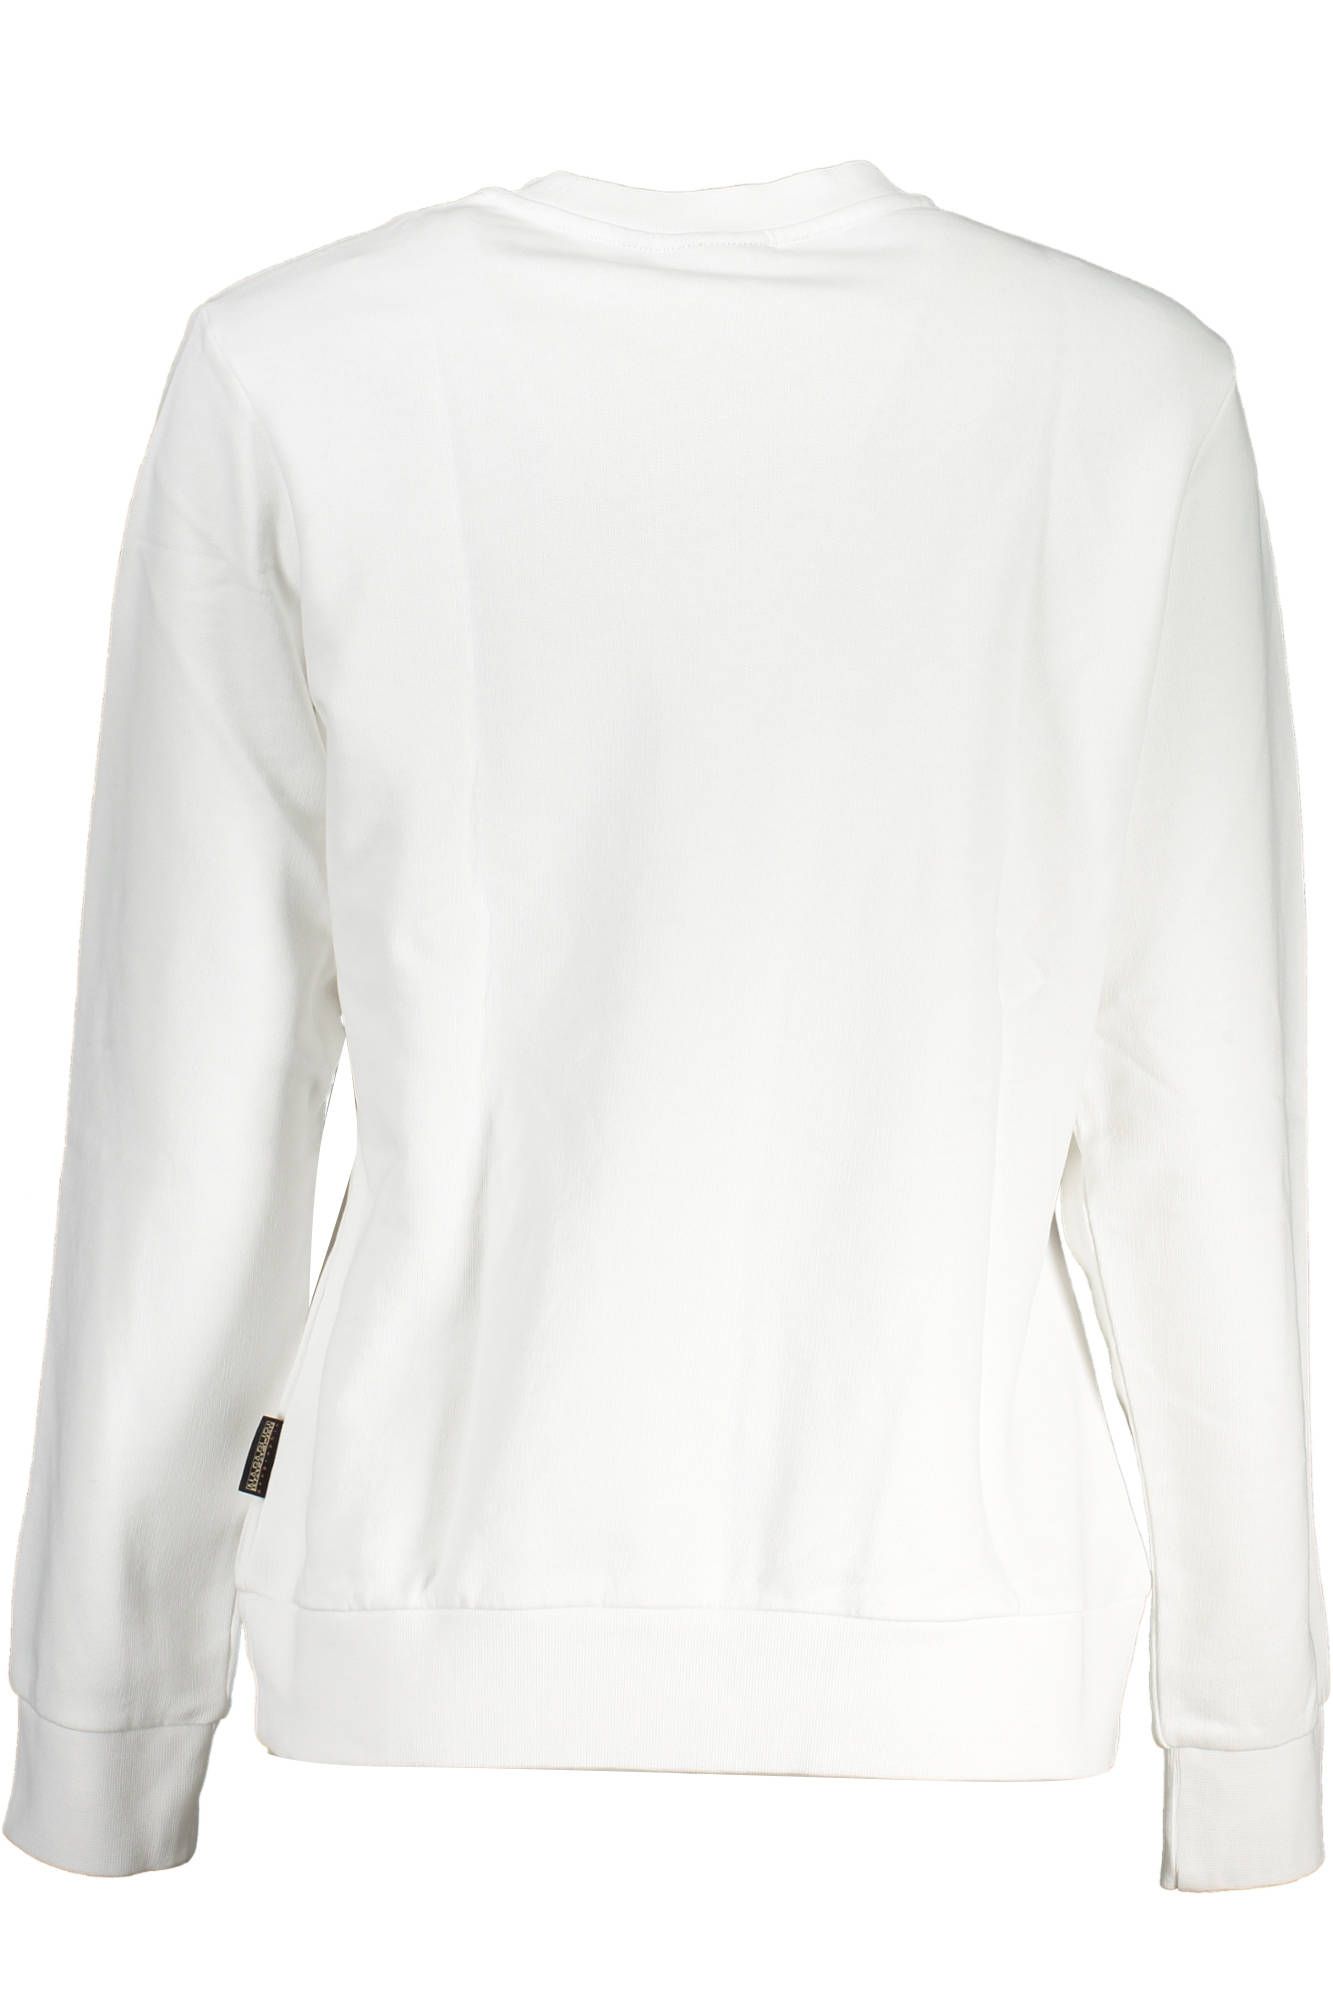 Elegant White Cotton Crew Neck Sweatshirt